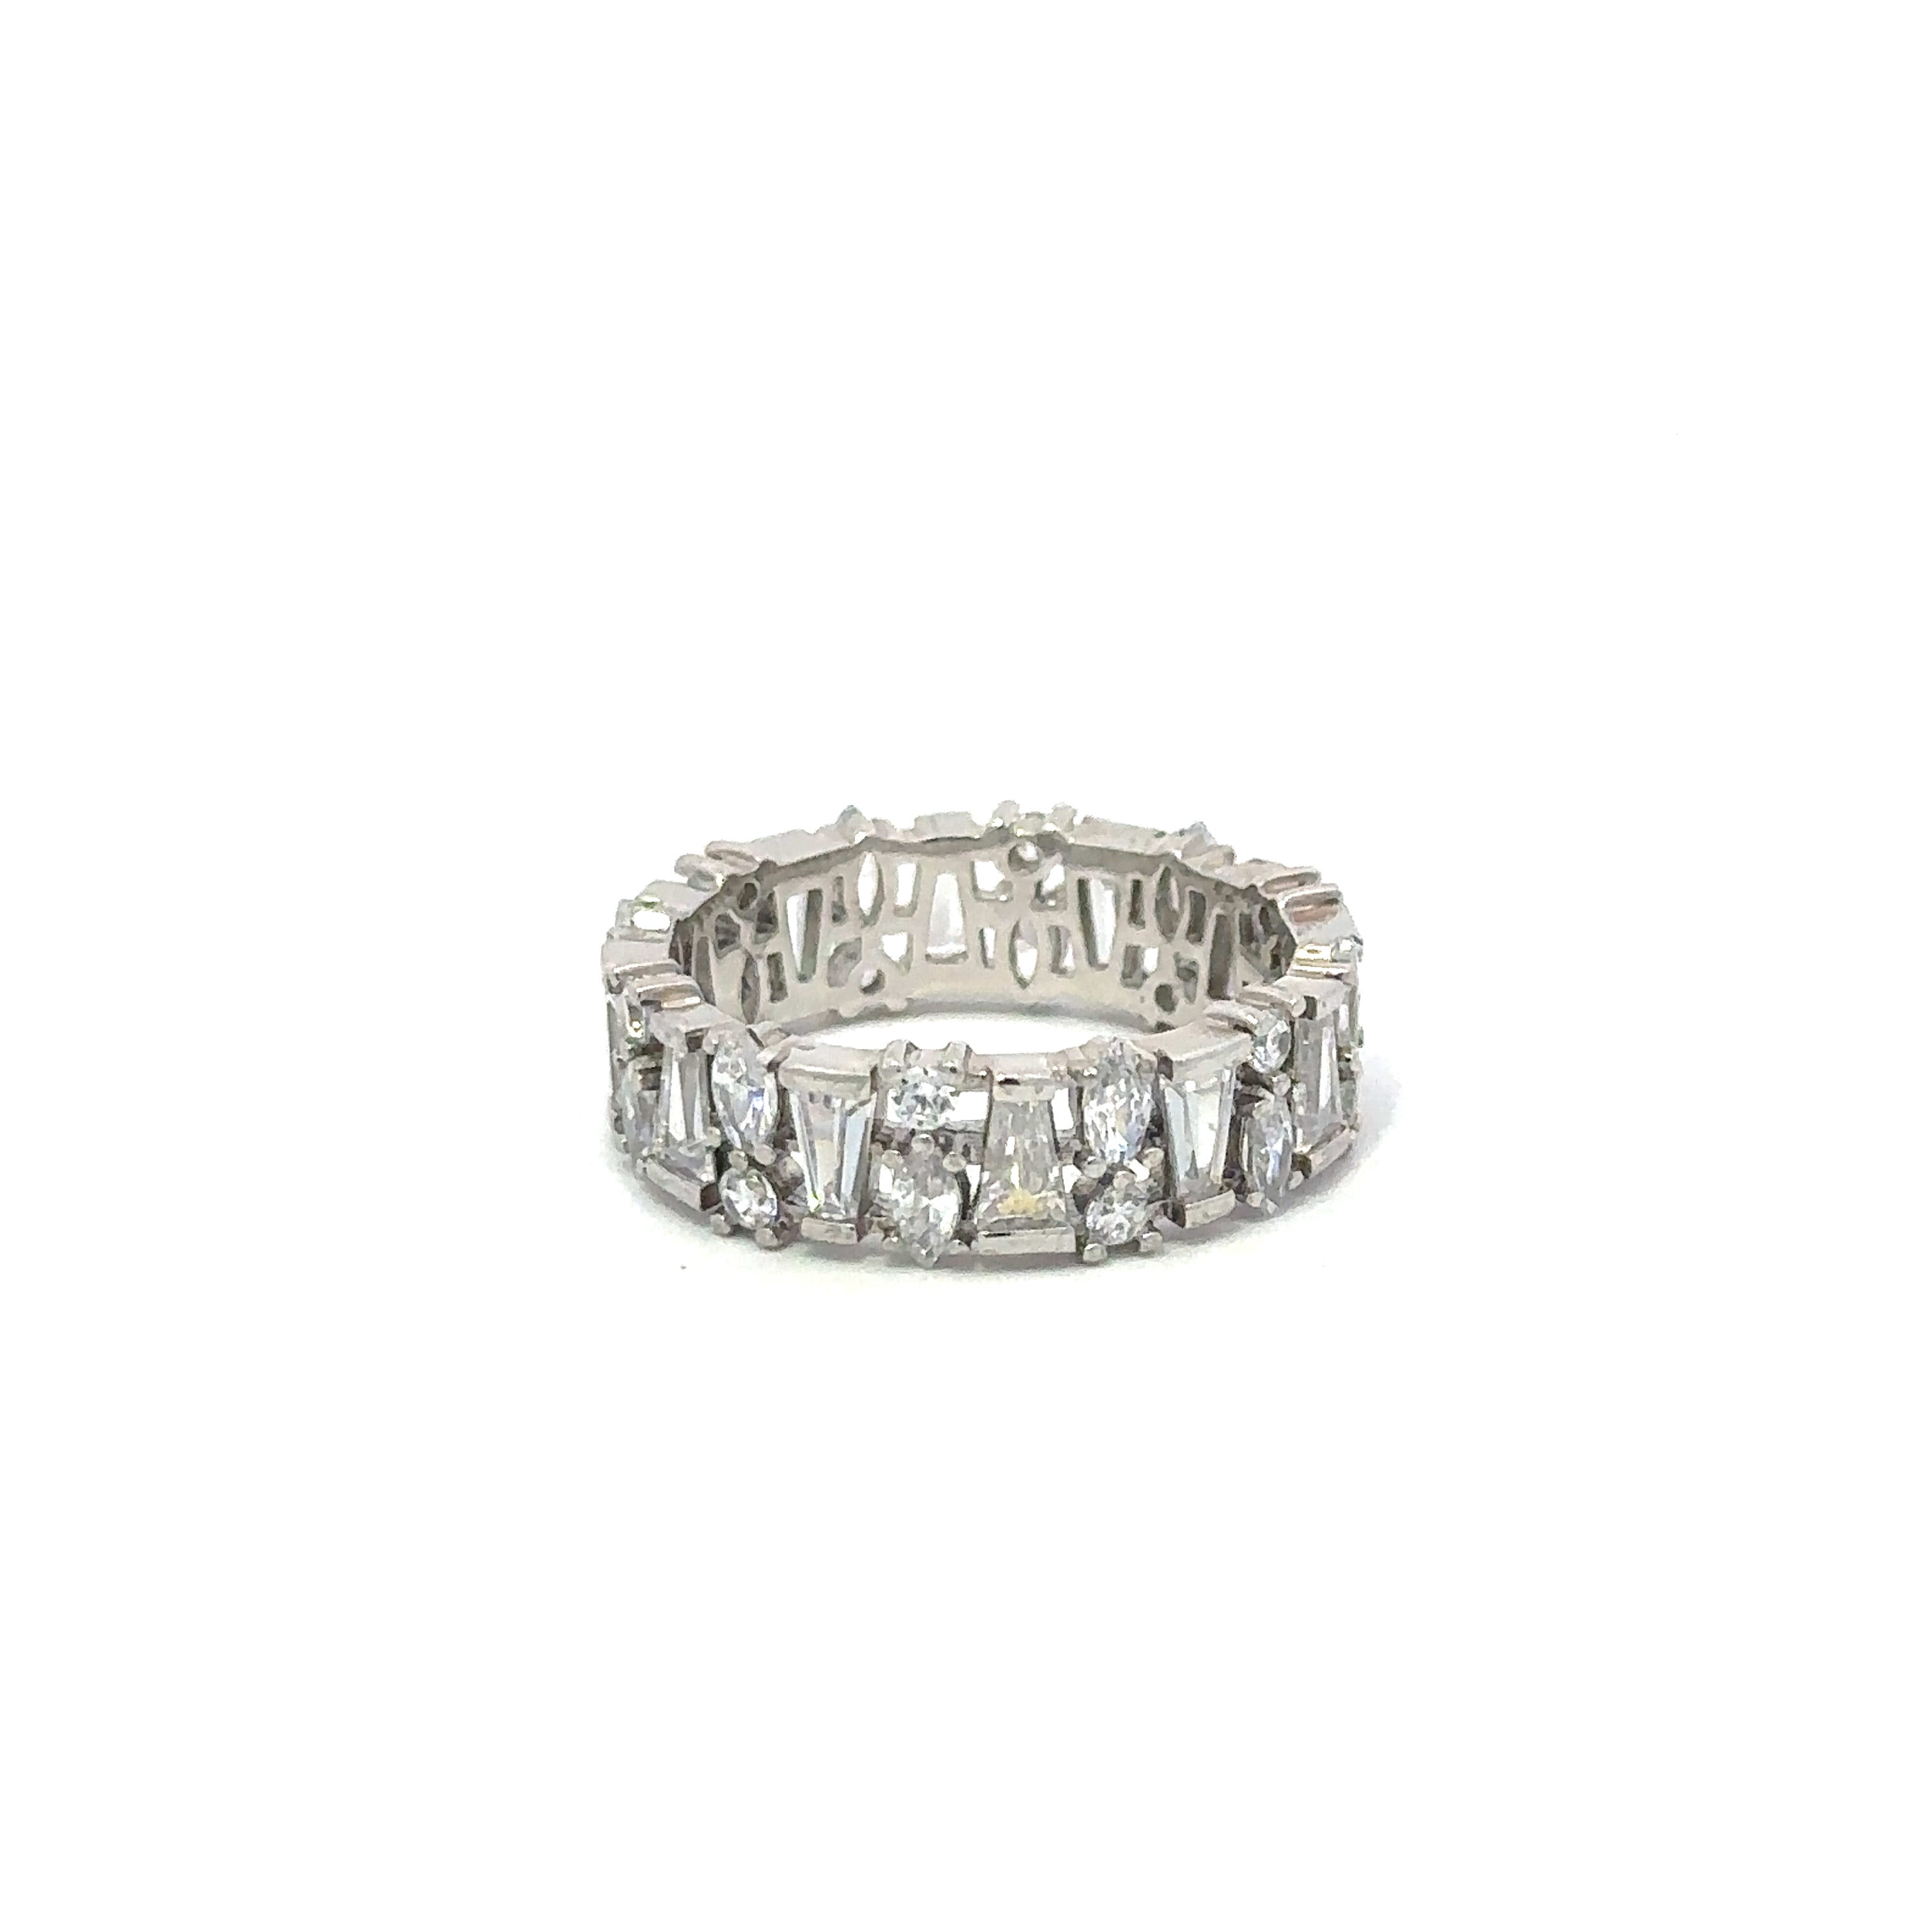 Stunning Everyday Silver Ring